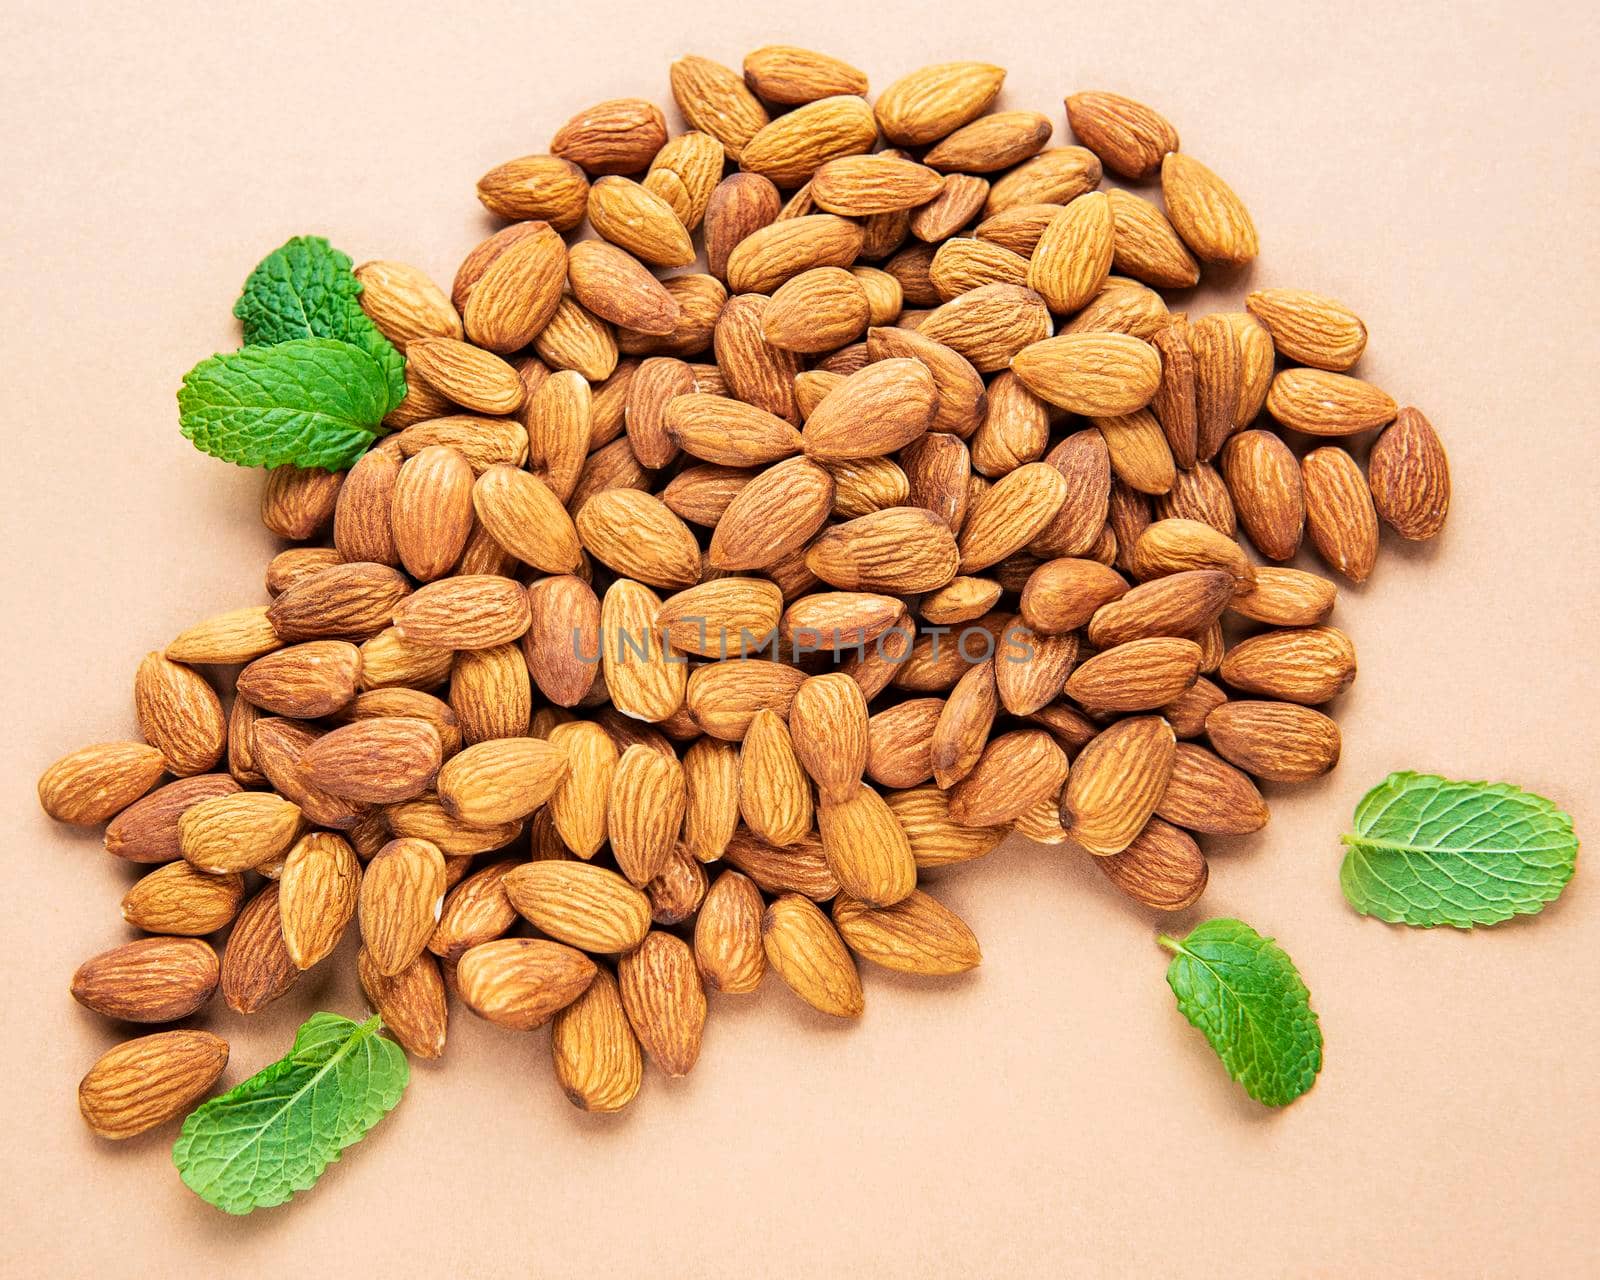 Almond nuts by Almaje